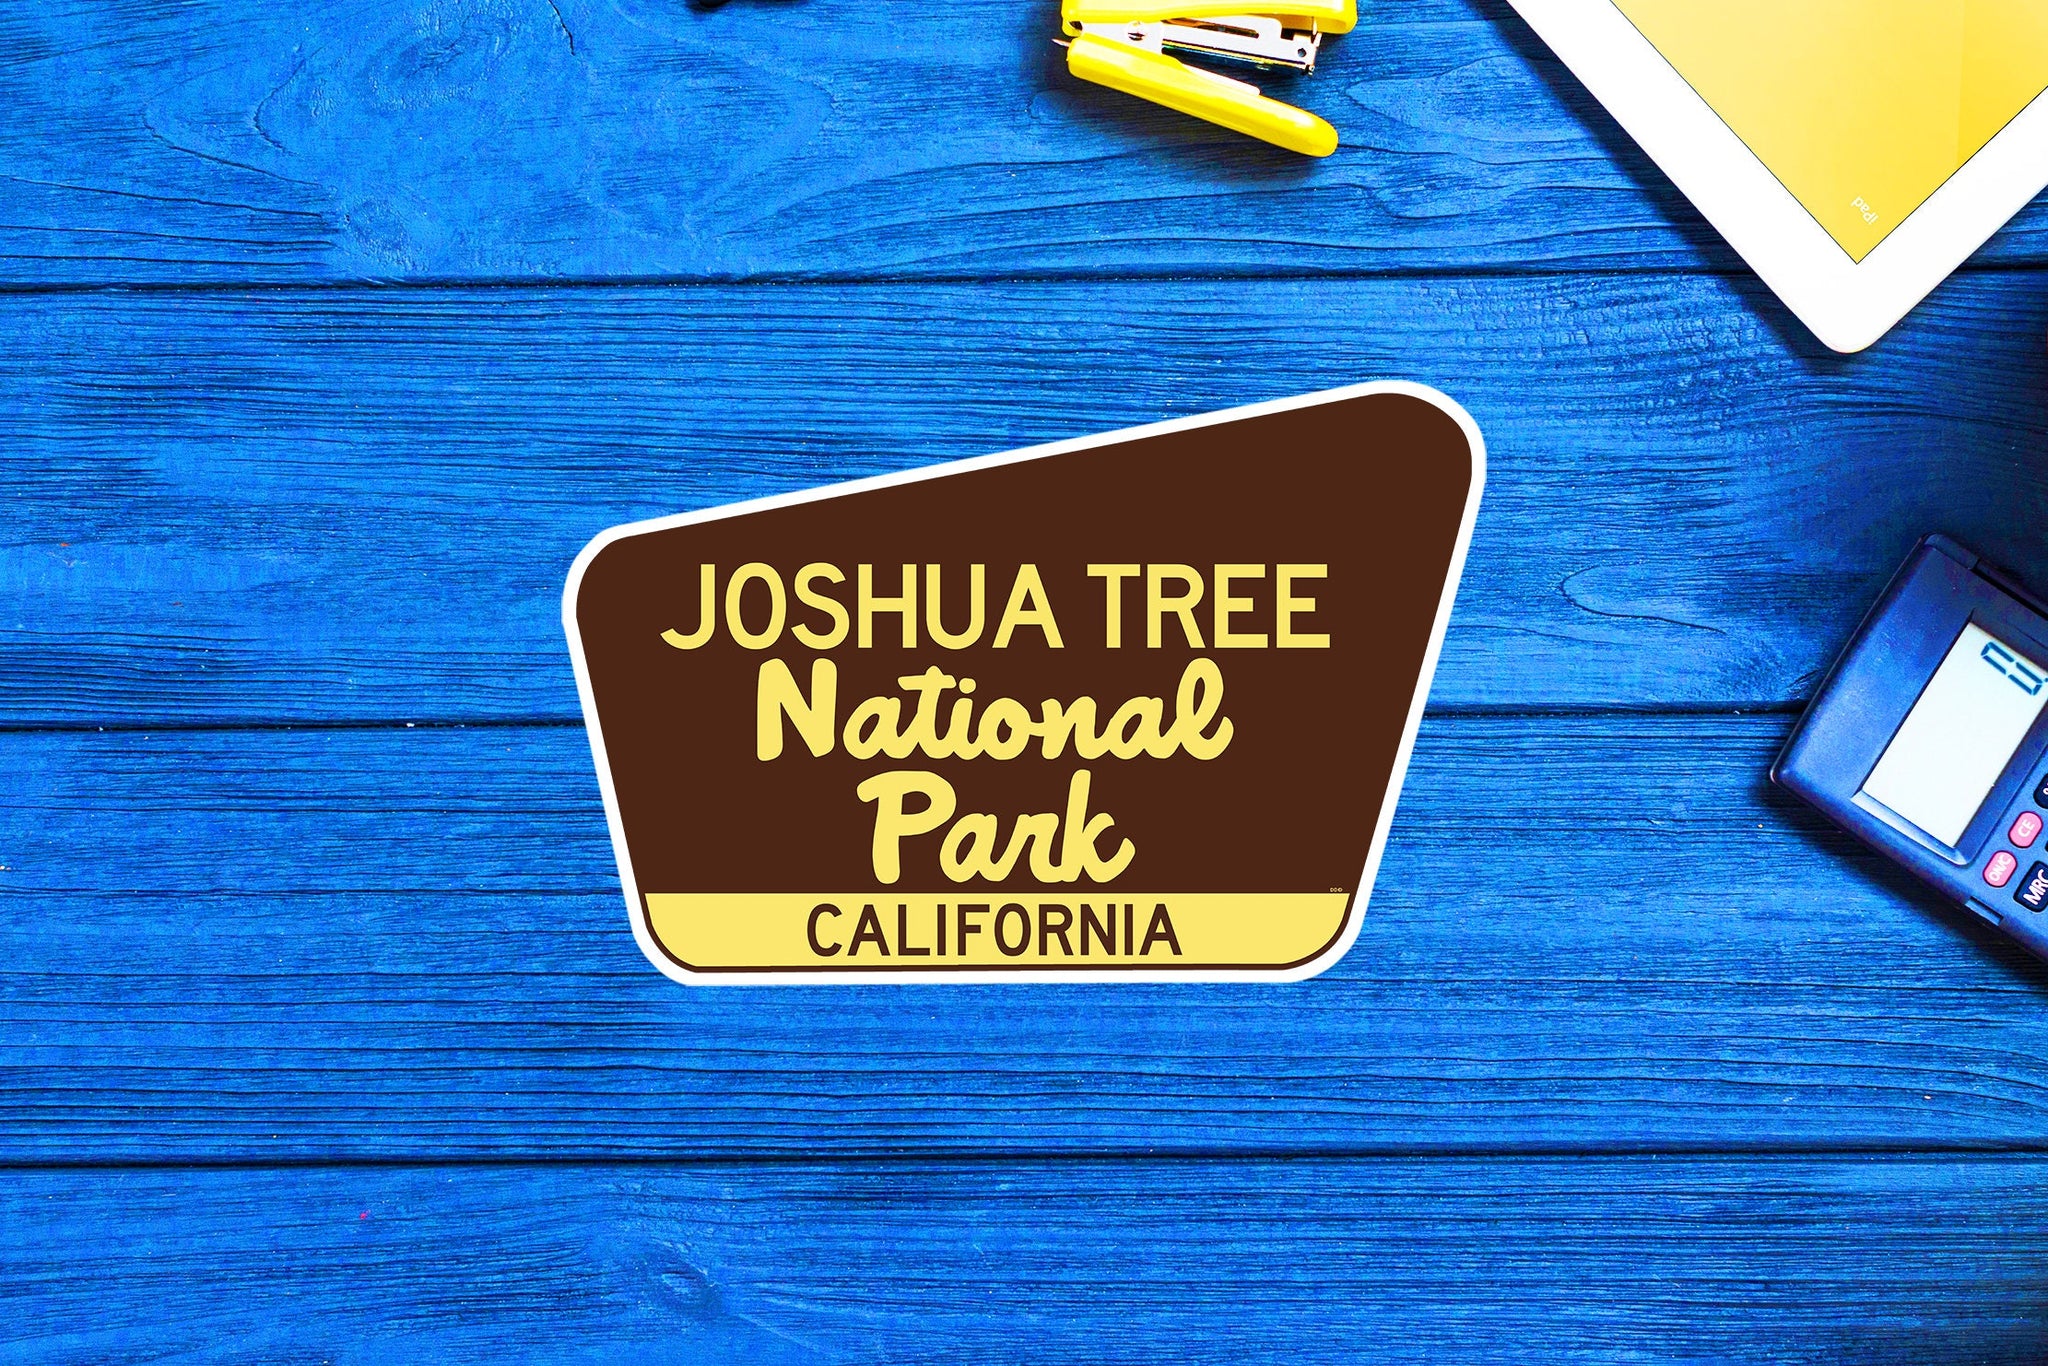 Joshua Tree Forest National Park California Travel Sticker Decal 3.75" Vinyl